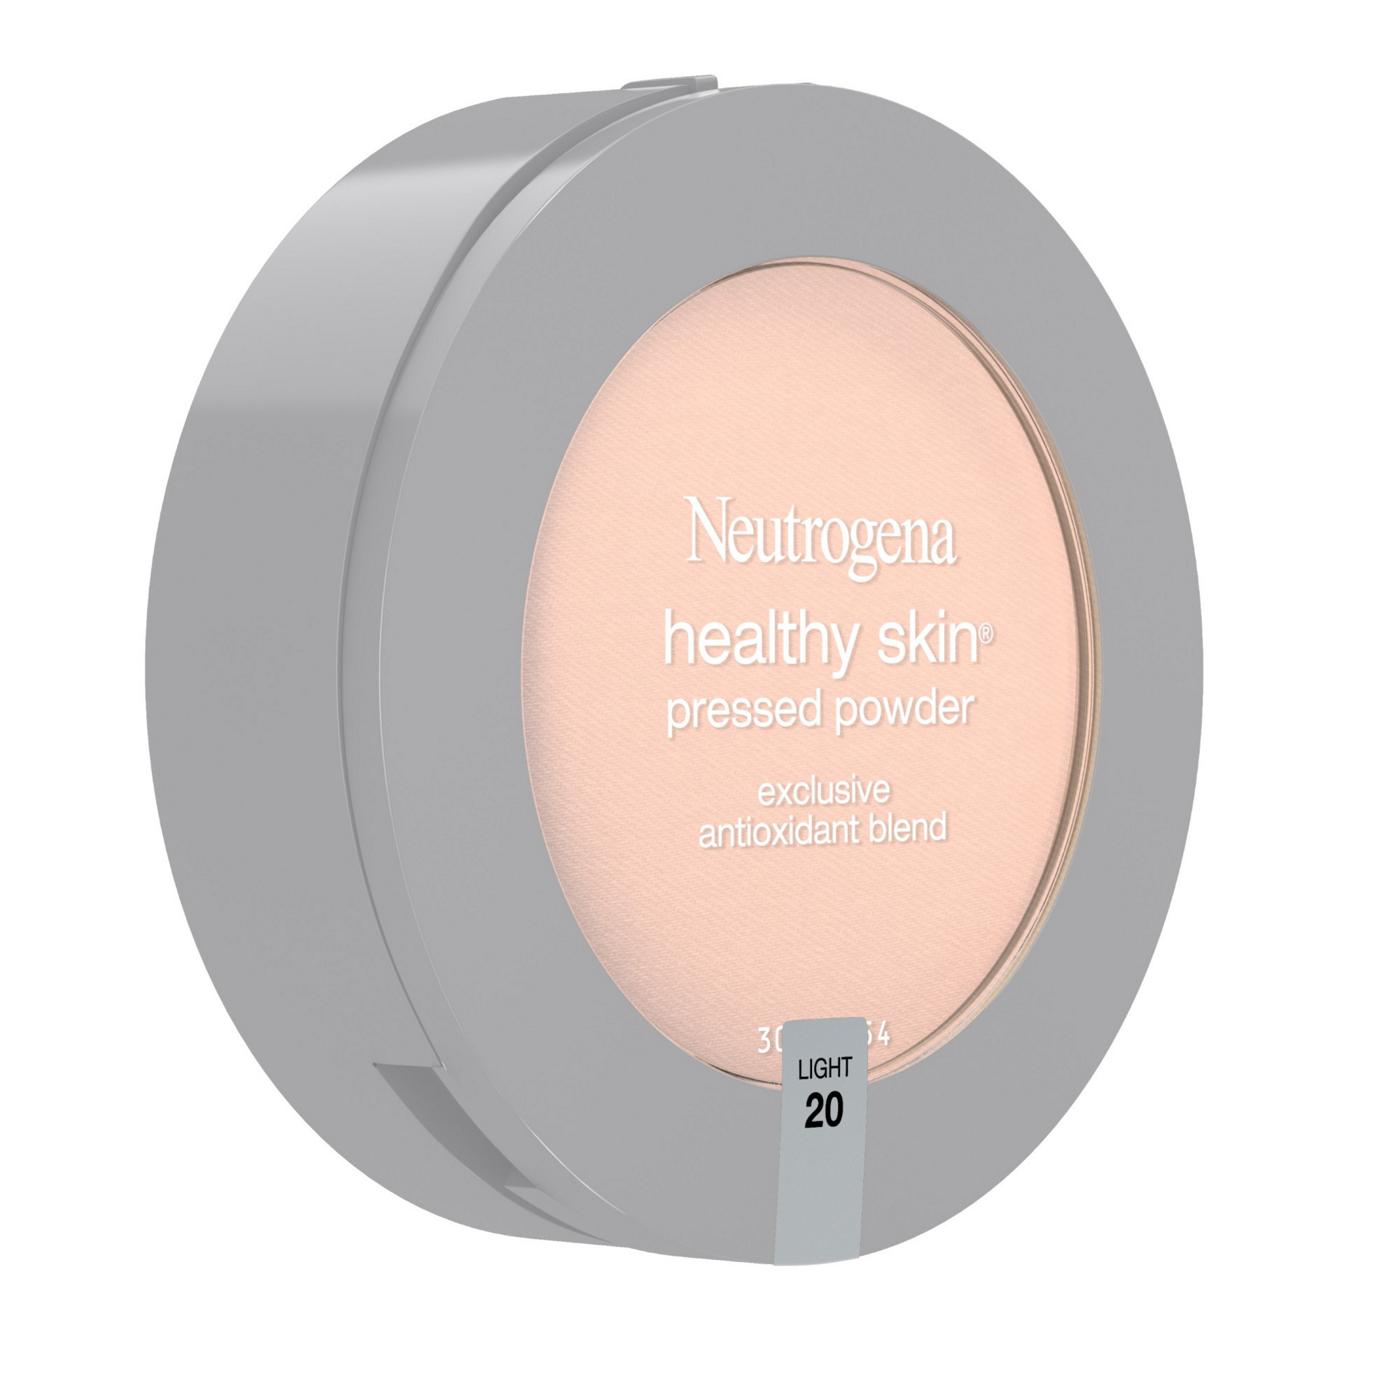 Neutrogena Healthy Skin Pressed Powder 20 Light; image 5 of 5